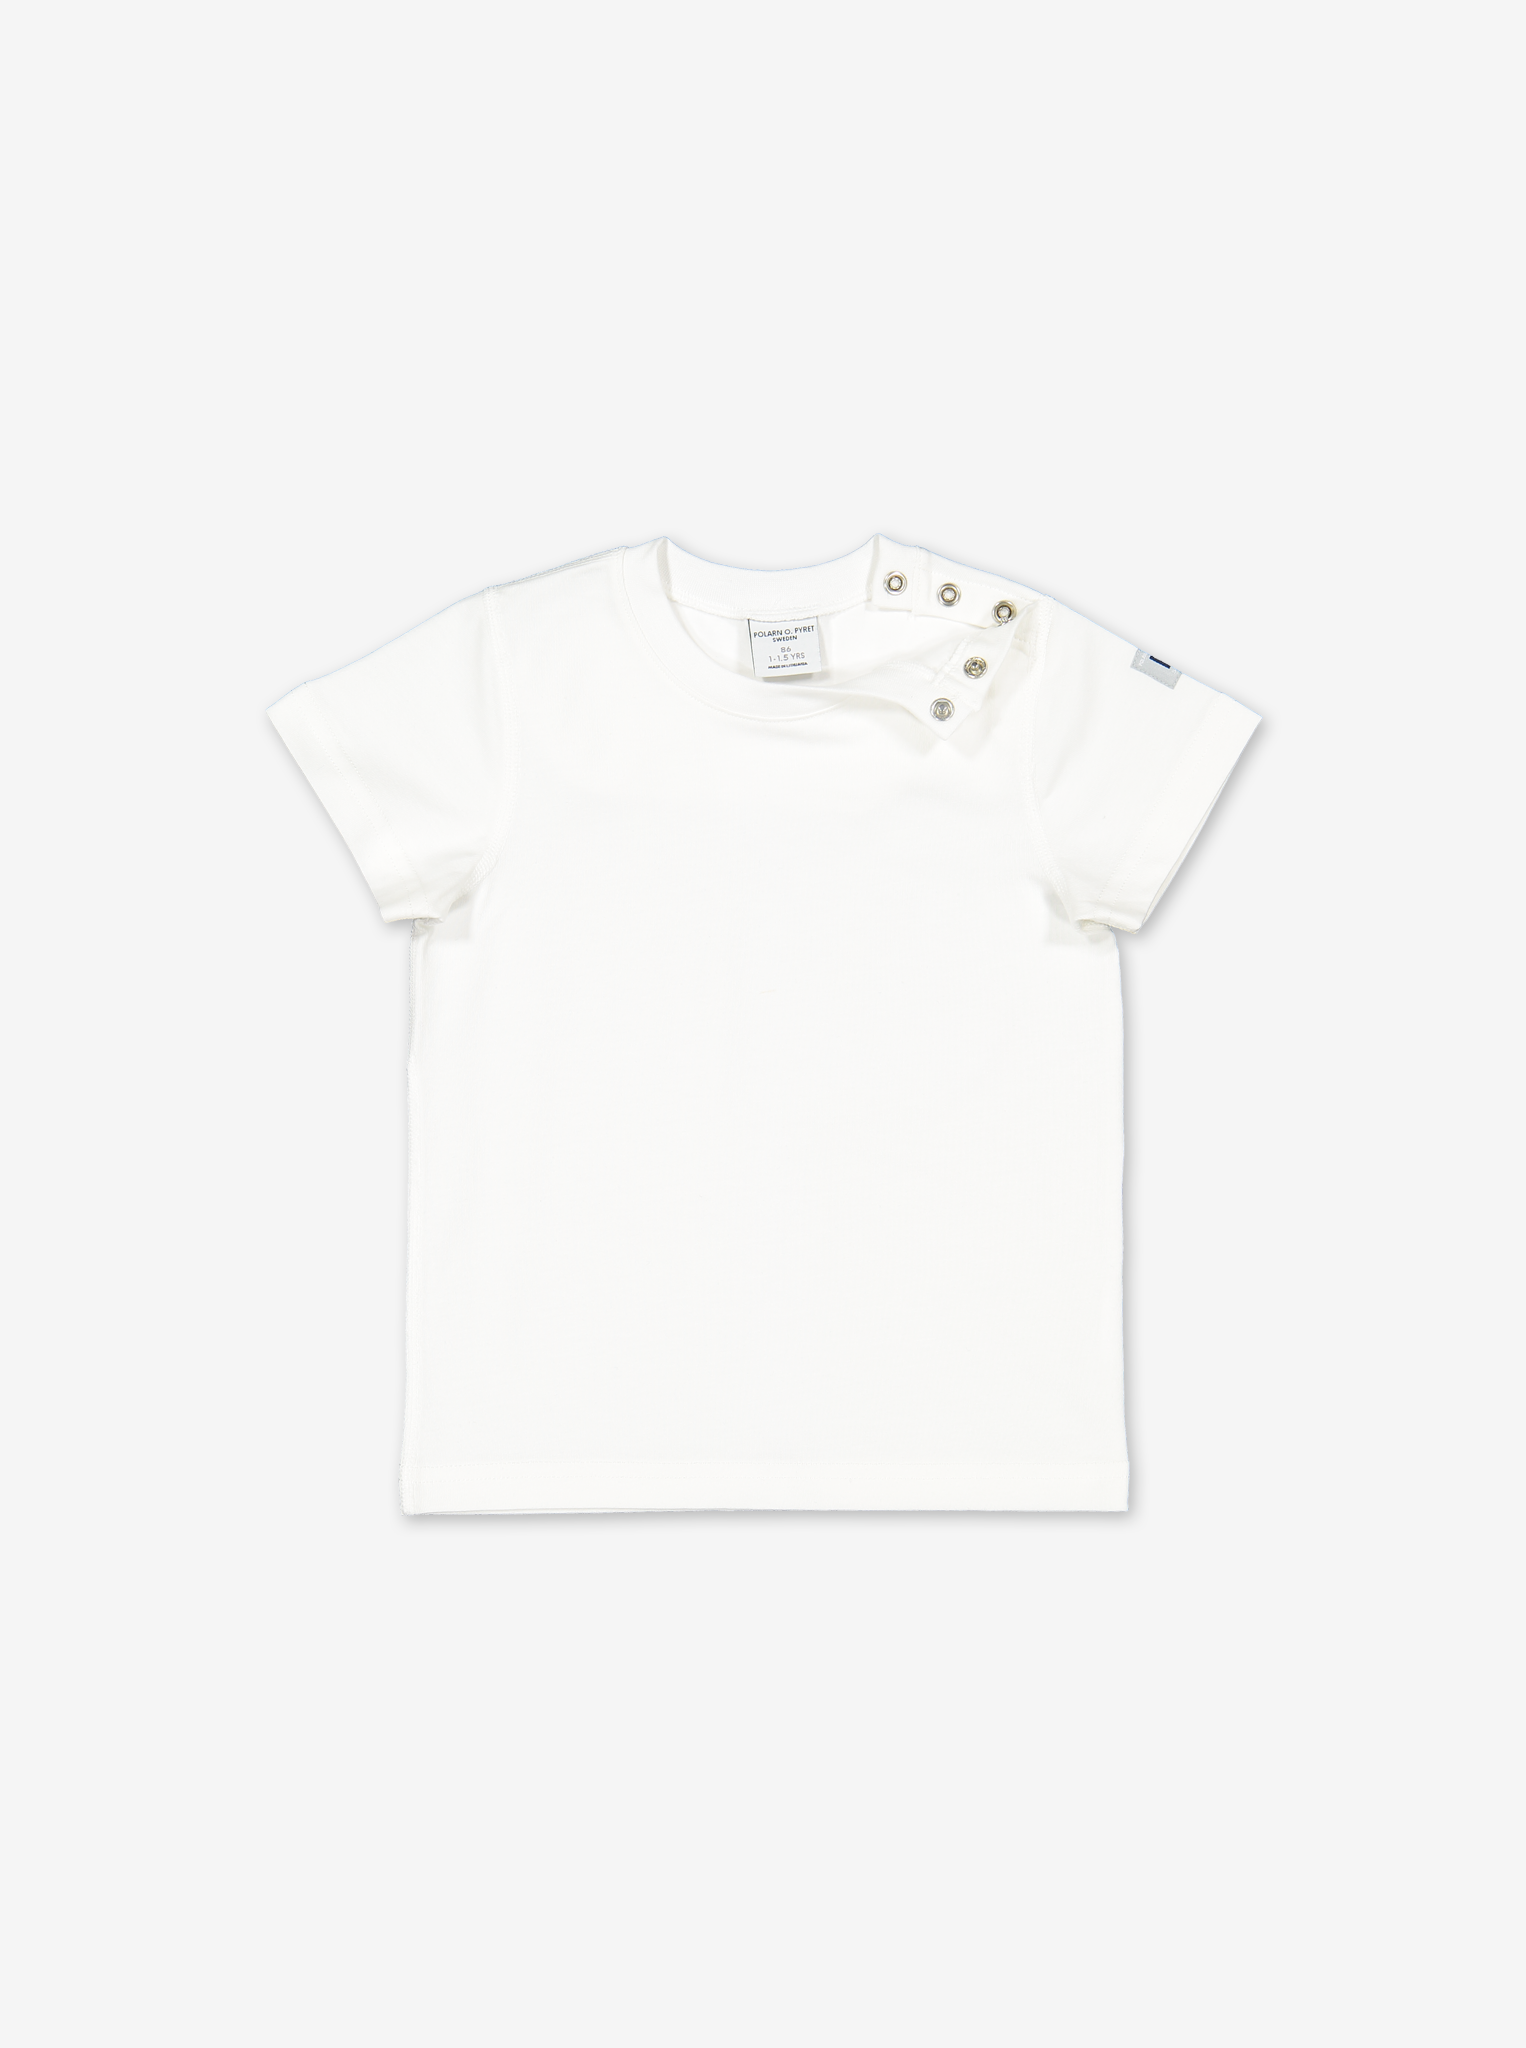 Organic Kids T-Shirt White Unisex 6m-12y